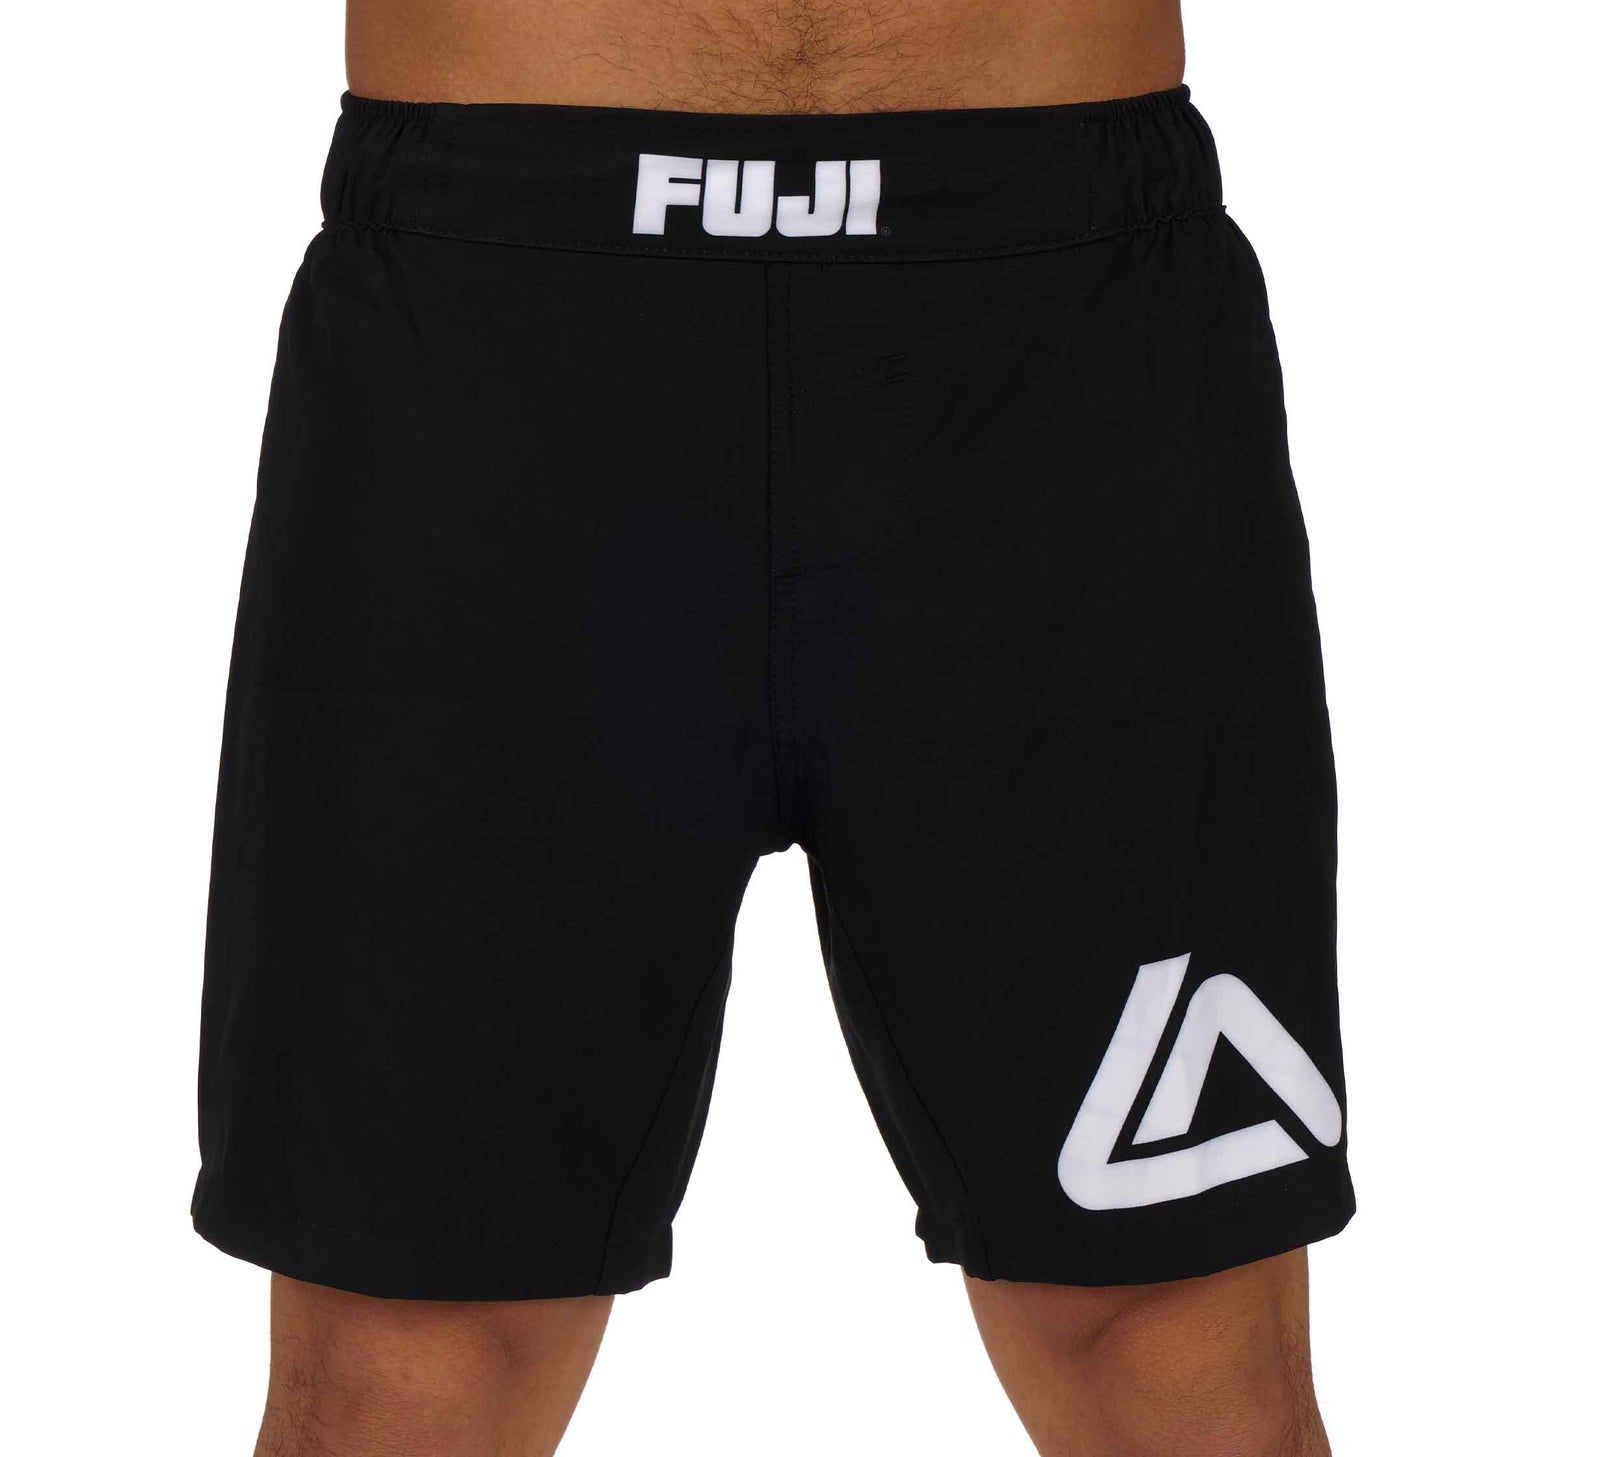 Roger Gracie Jiu jitsu Official Kids Fight shorts